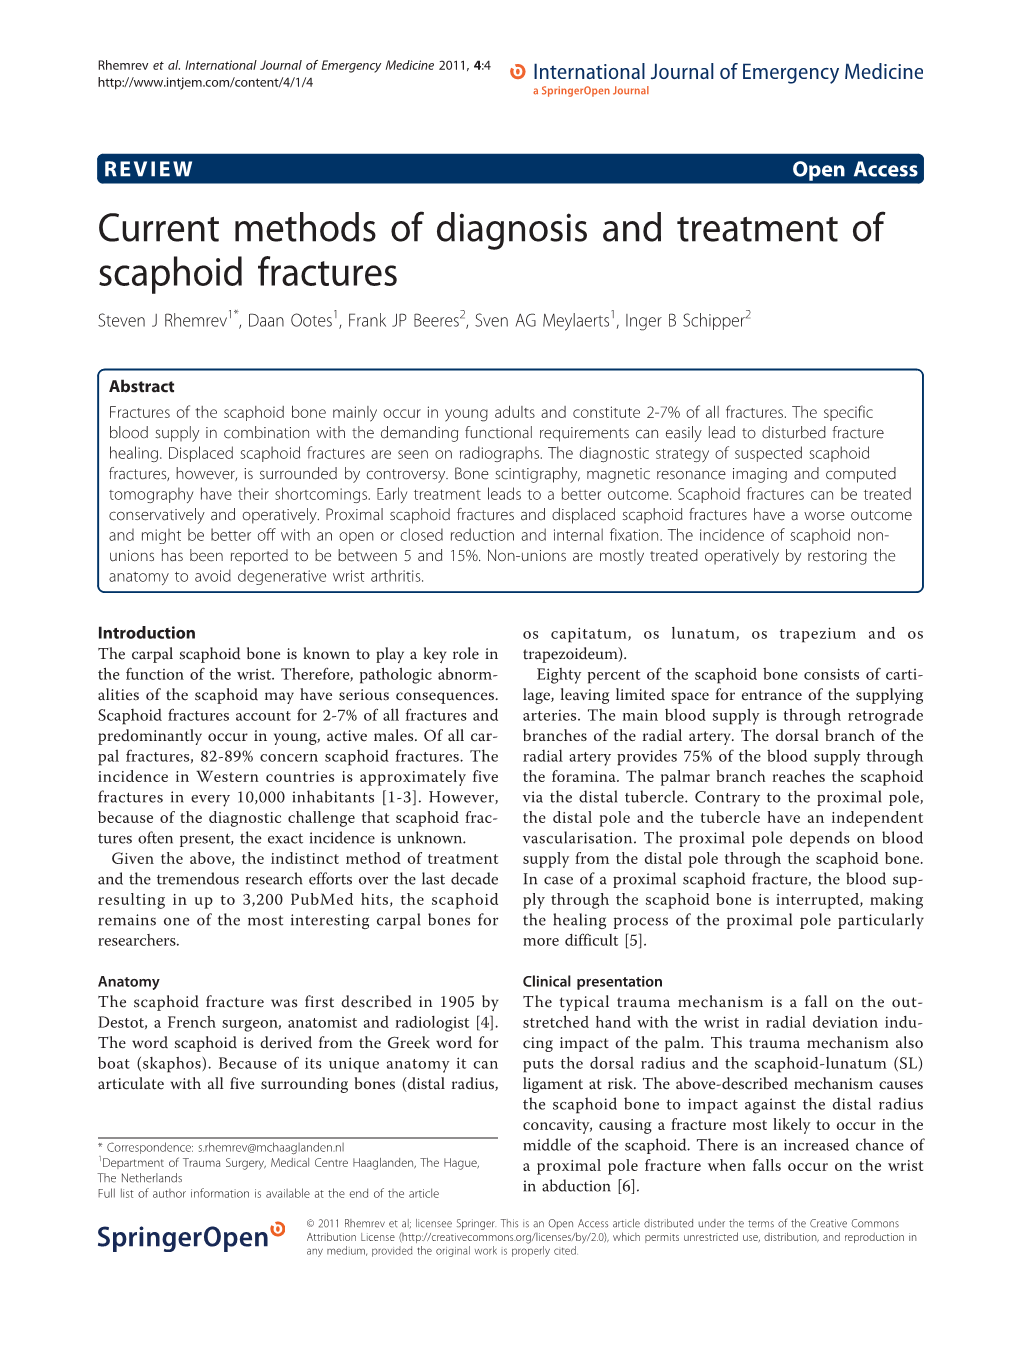 Current Methods of Diagnosis and Treatment of Scaphoid Fractures Steven J Rhemrev1*, Daan Ootes1, Frank JP Beeres2, Sven AG Meylaerts1, Inger B Schipper2